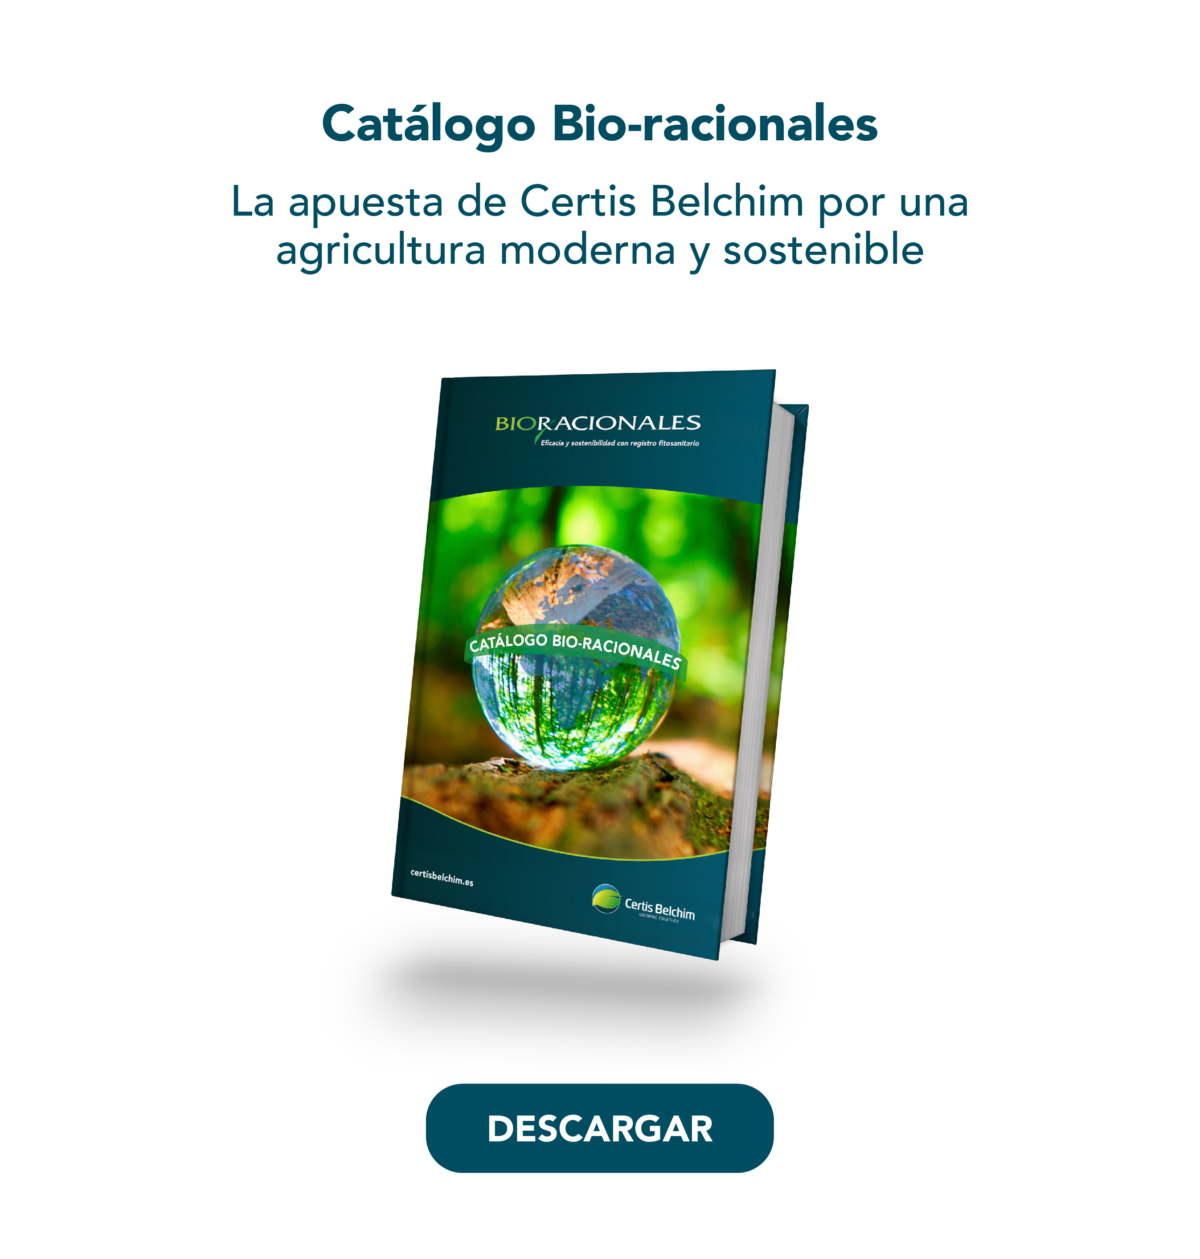 Catálogo Bio-racionales Certis Belchim